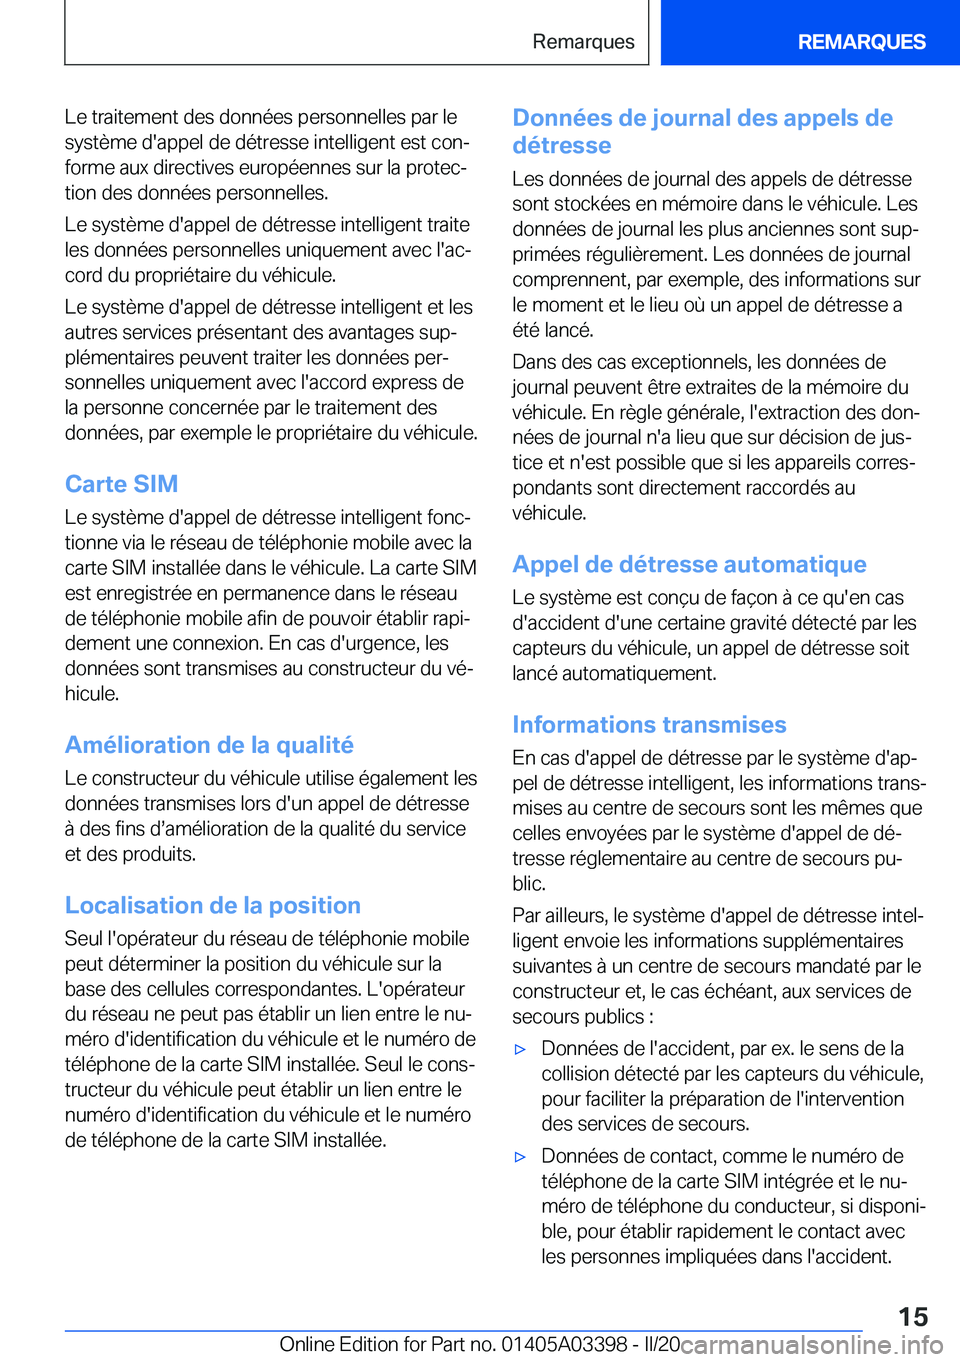 BMW M8 GRAN COUPE 2020  Notices Demploi (in French) �L�e��t�r�a�i�t�e�m�e�n�t��d�e�s��d�o�n�n�é�e�s��p�e�r�s�o�n�n�e�l�l�e�s��p�a�r��l�e�s�y�s�t�è�m�e��d�'�a�p�p�e�l��d�e��d�é�t�r�e�s�s�e��i�n�t�e�l�l�i�g�e�n�t��e�s�t��c�o�nj
�f�o�r